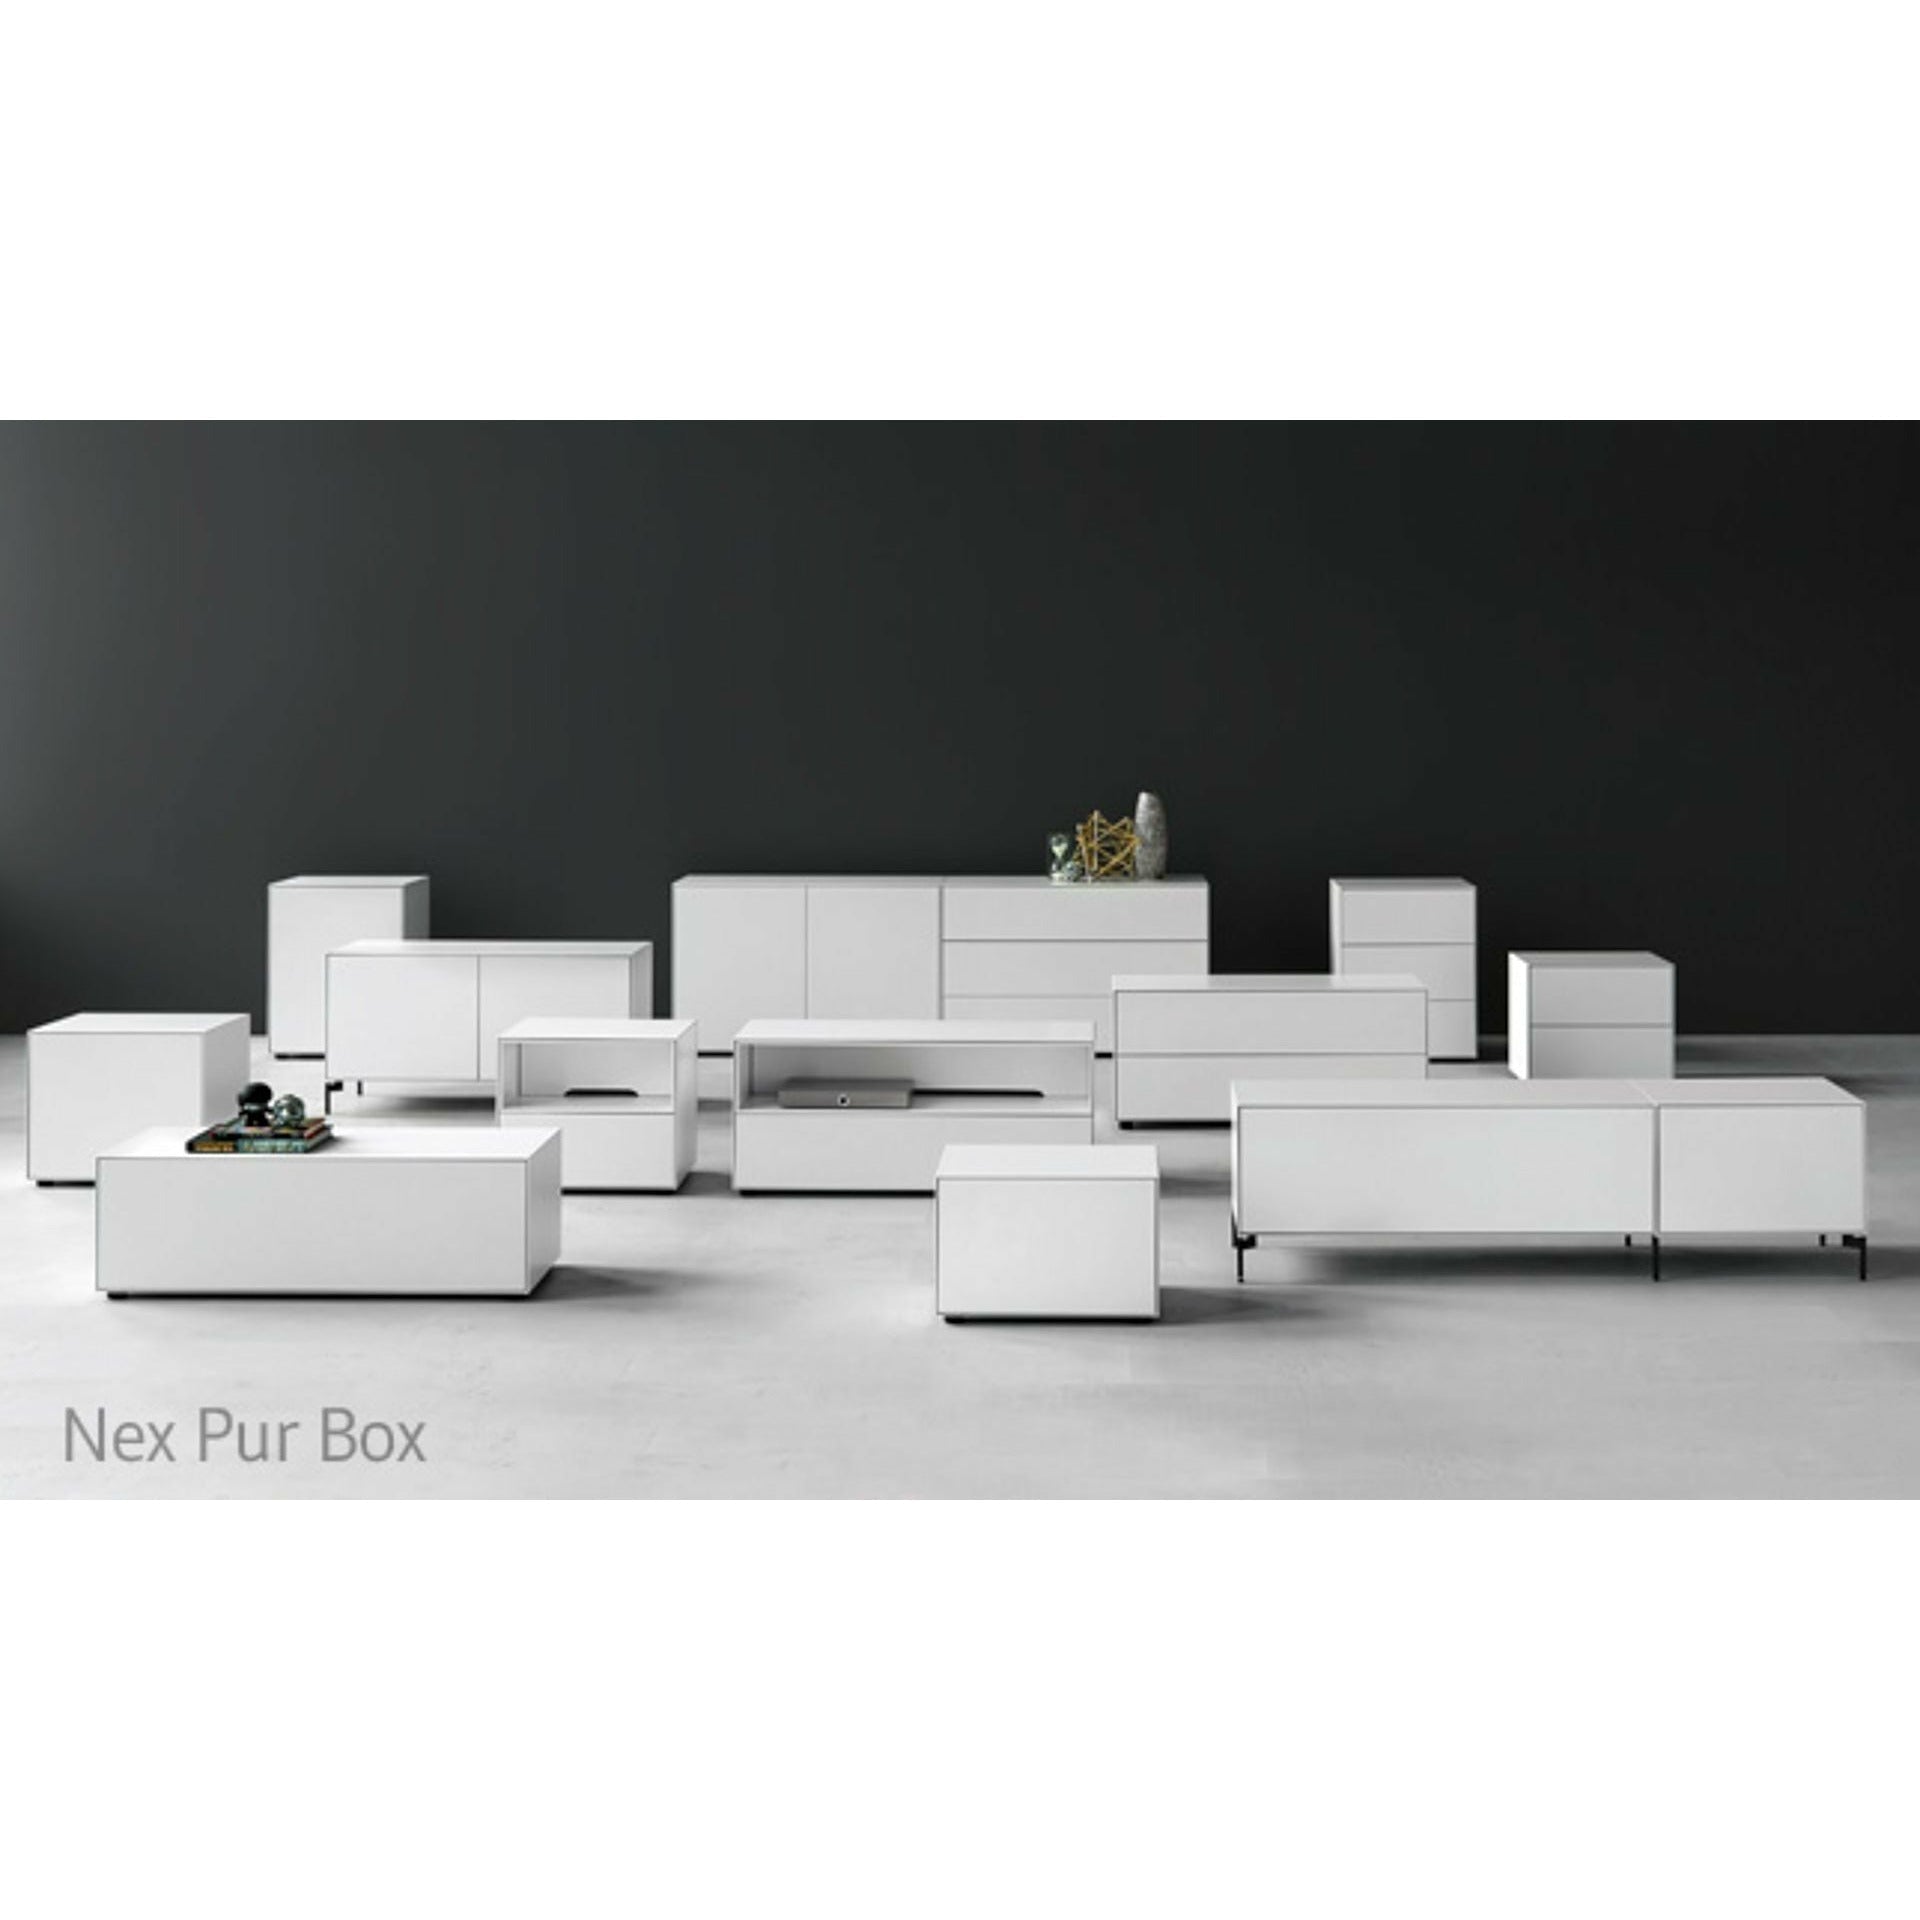 Piure Nex Pur Box Door HX W 75x120 cm, 1 plank, wit